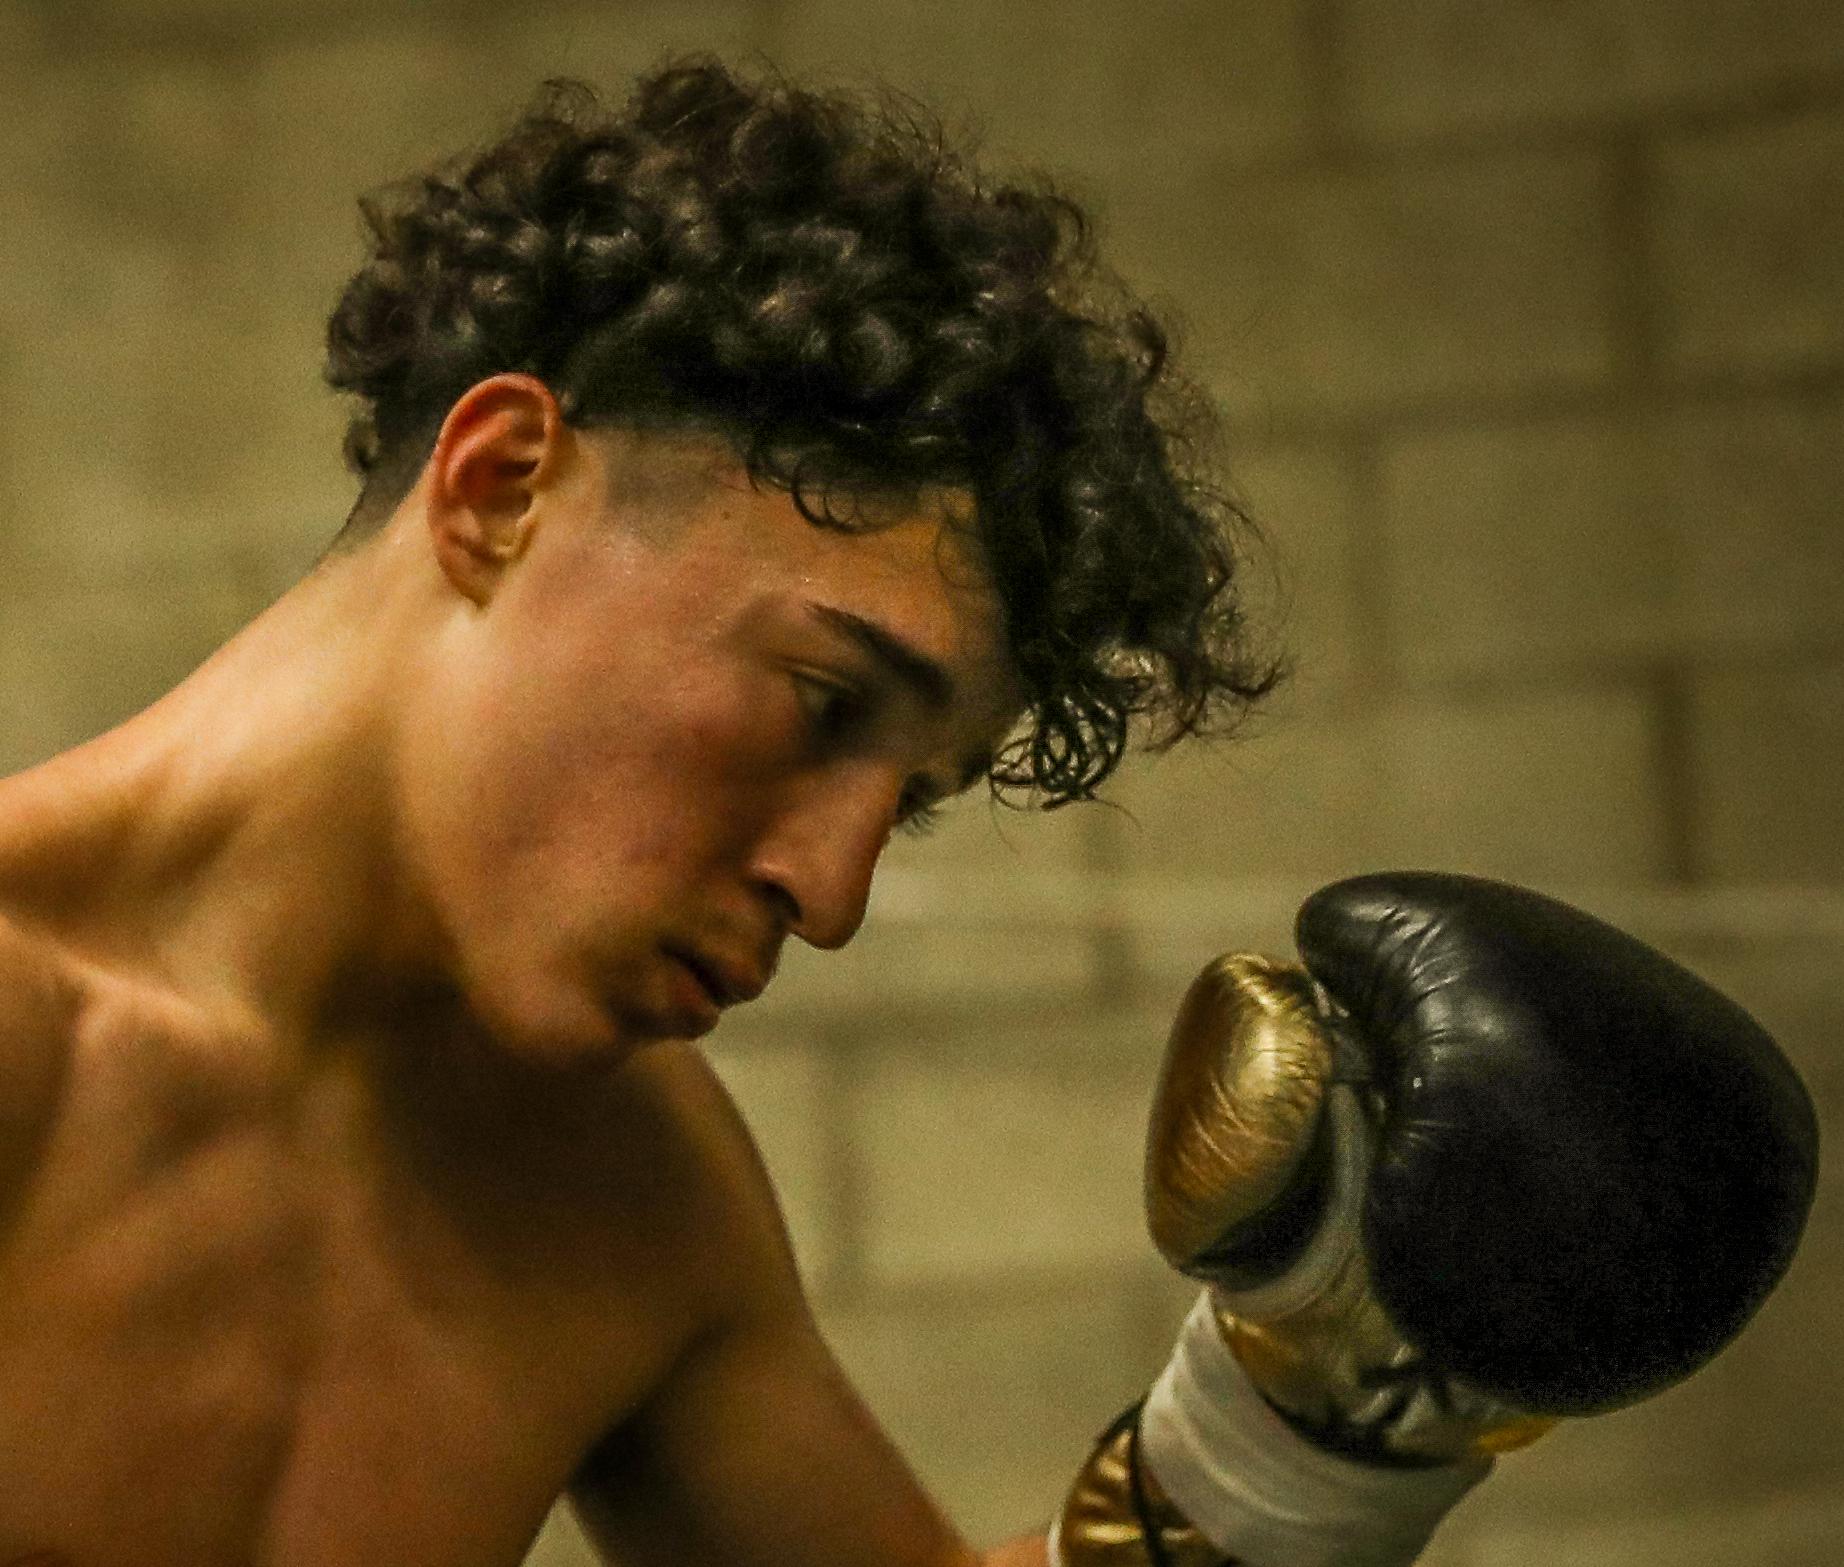 USA Boxer Steve Navarro, color photography, Boxing, Team Steve Navarro - Photograph by Mayumi Cabrera